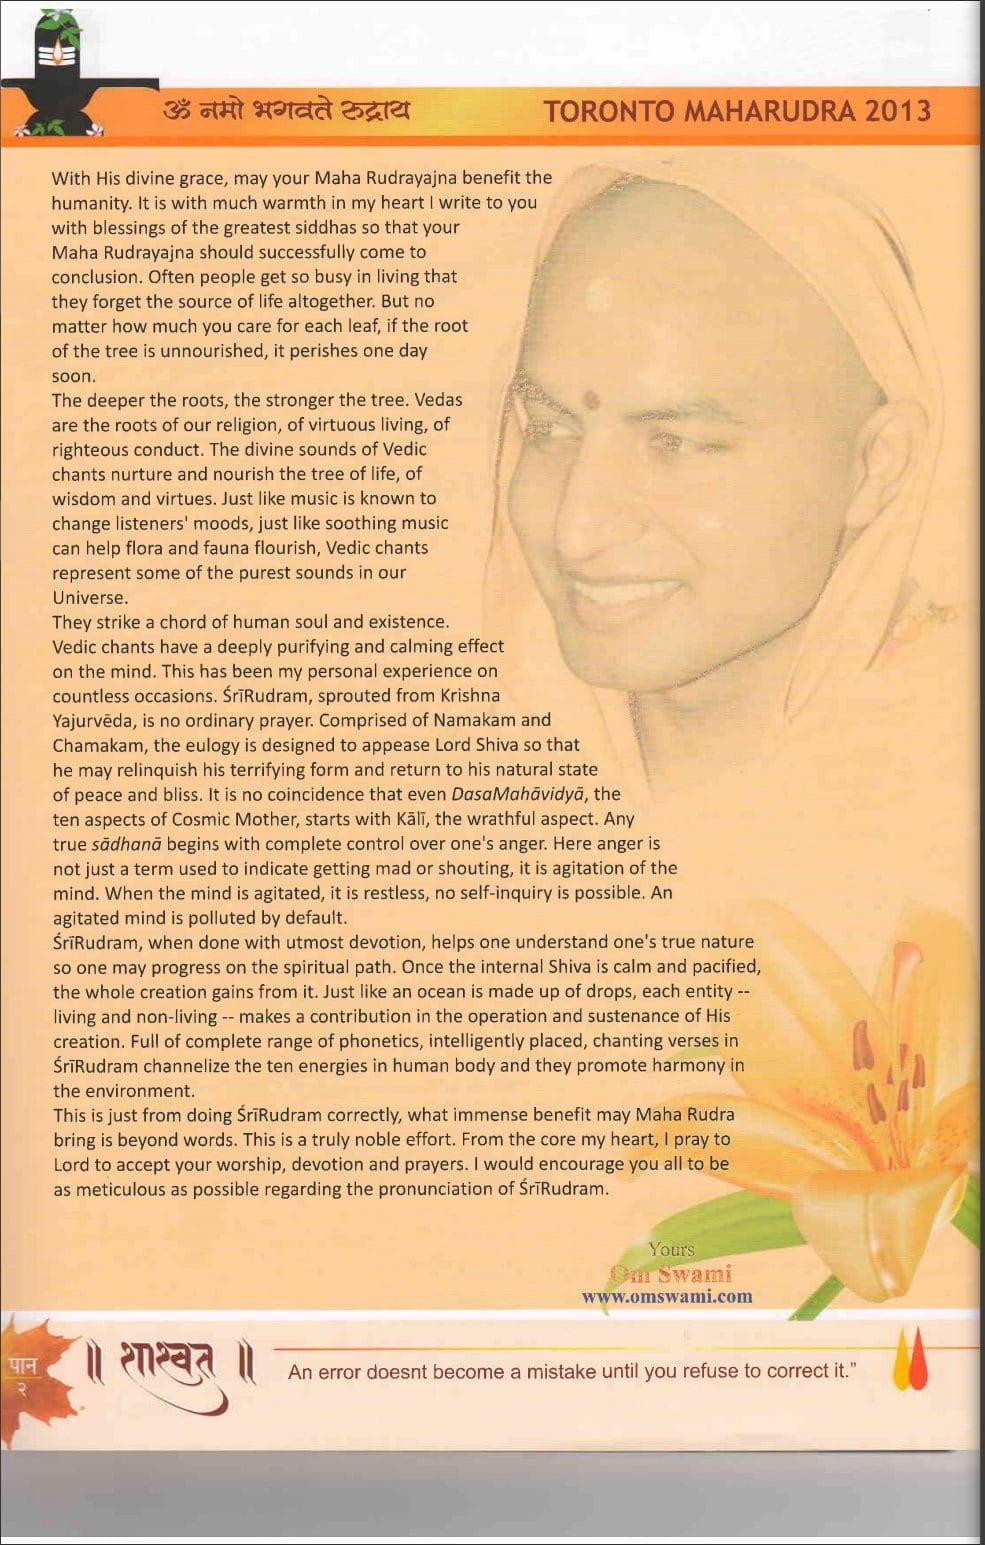 Om swami message on sri rudram